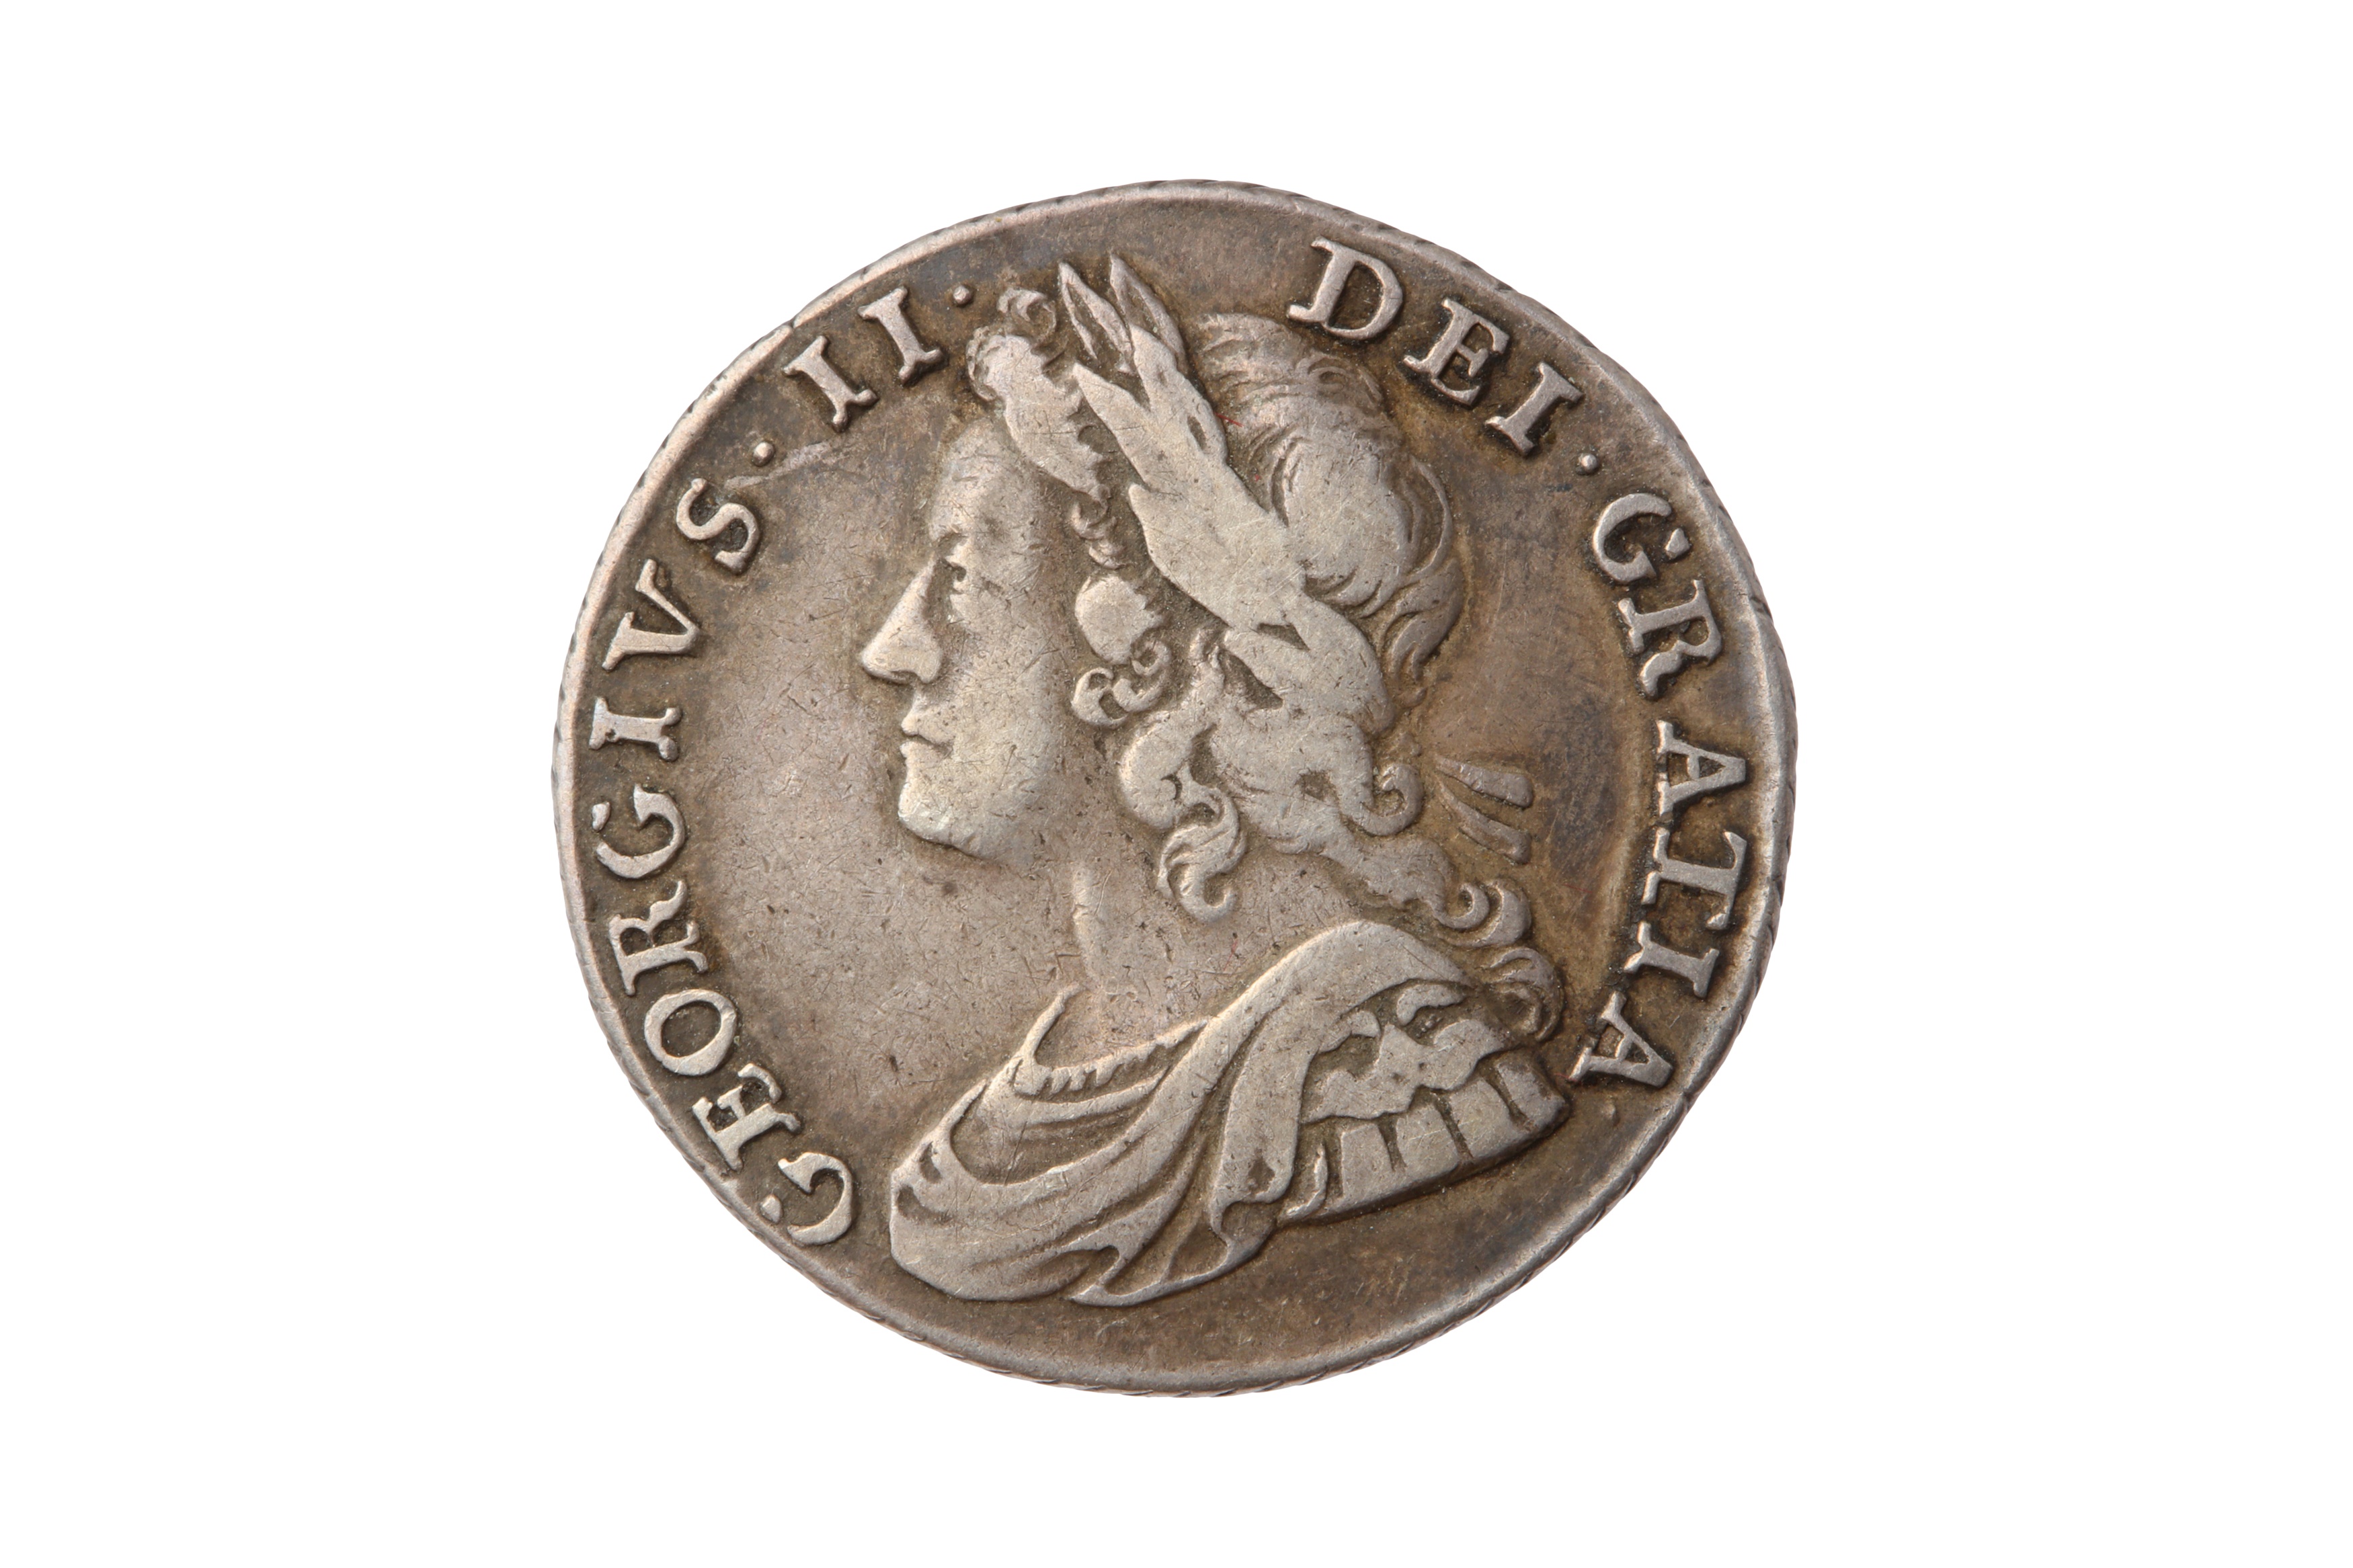 GEORGE II (1727 - 1760), 1735 SHILLING.